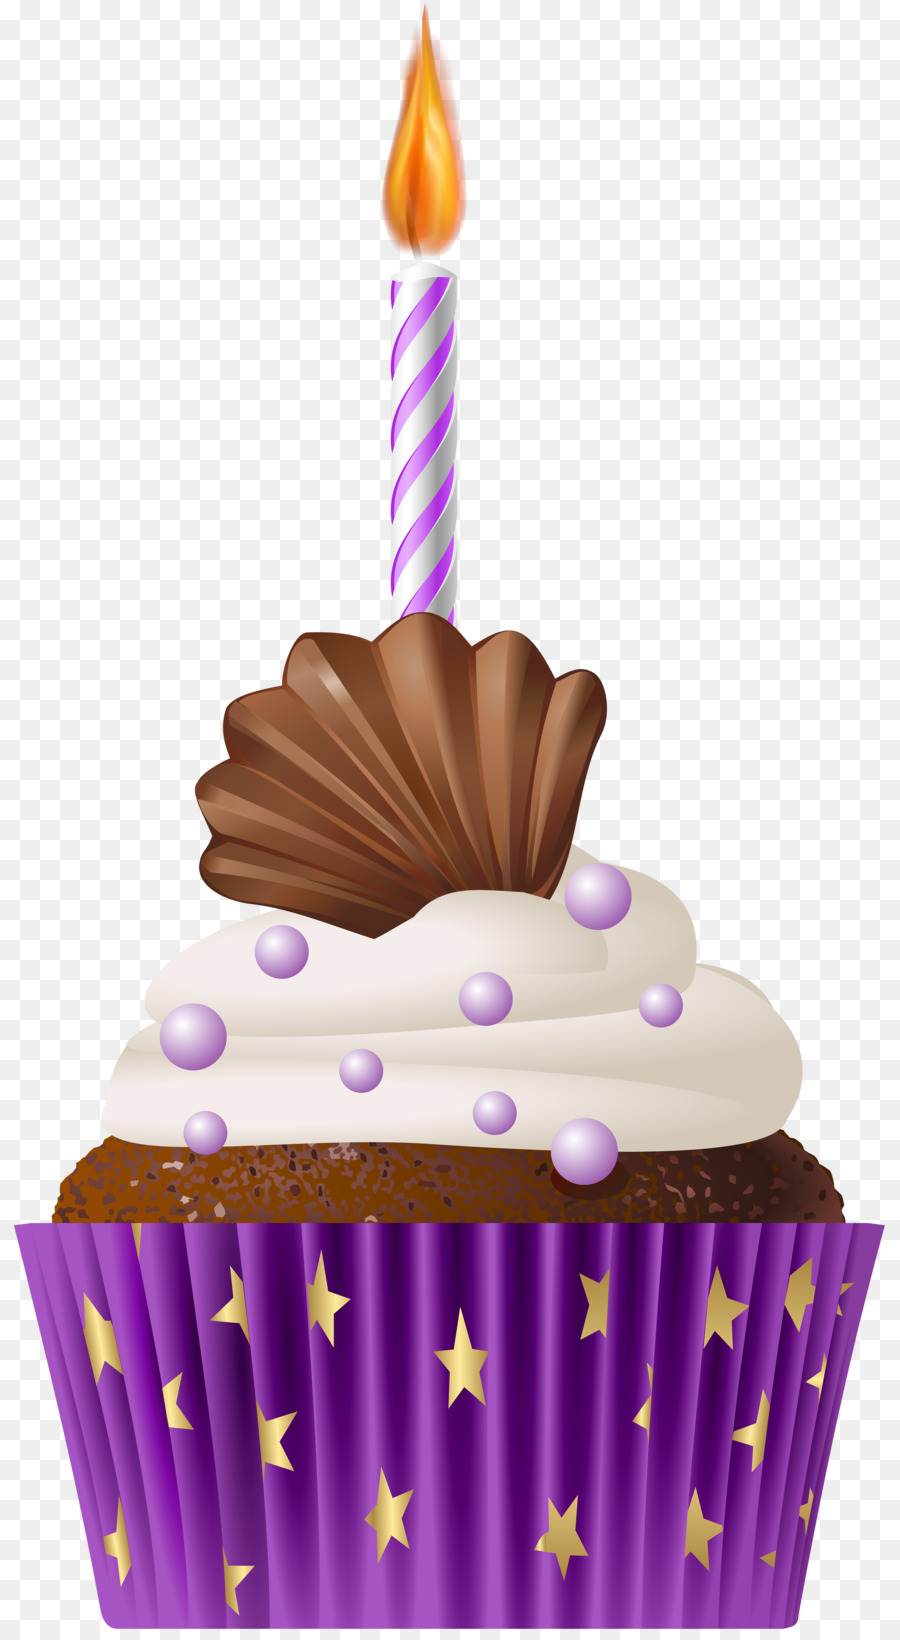 Birthday cake Cupcake Clip art - birthday cake png download - 4407*8000 - Free Transparent Birthday Cake png Download.